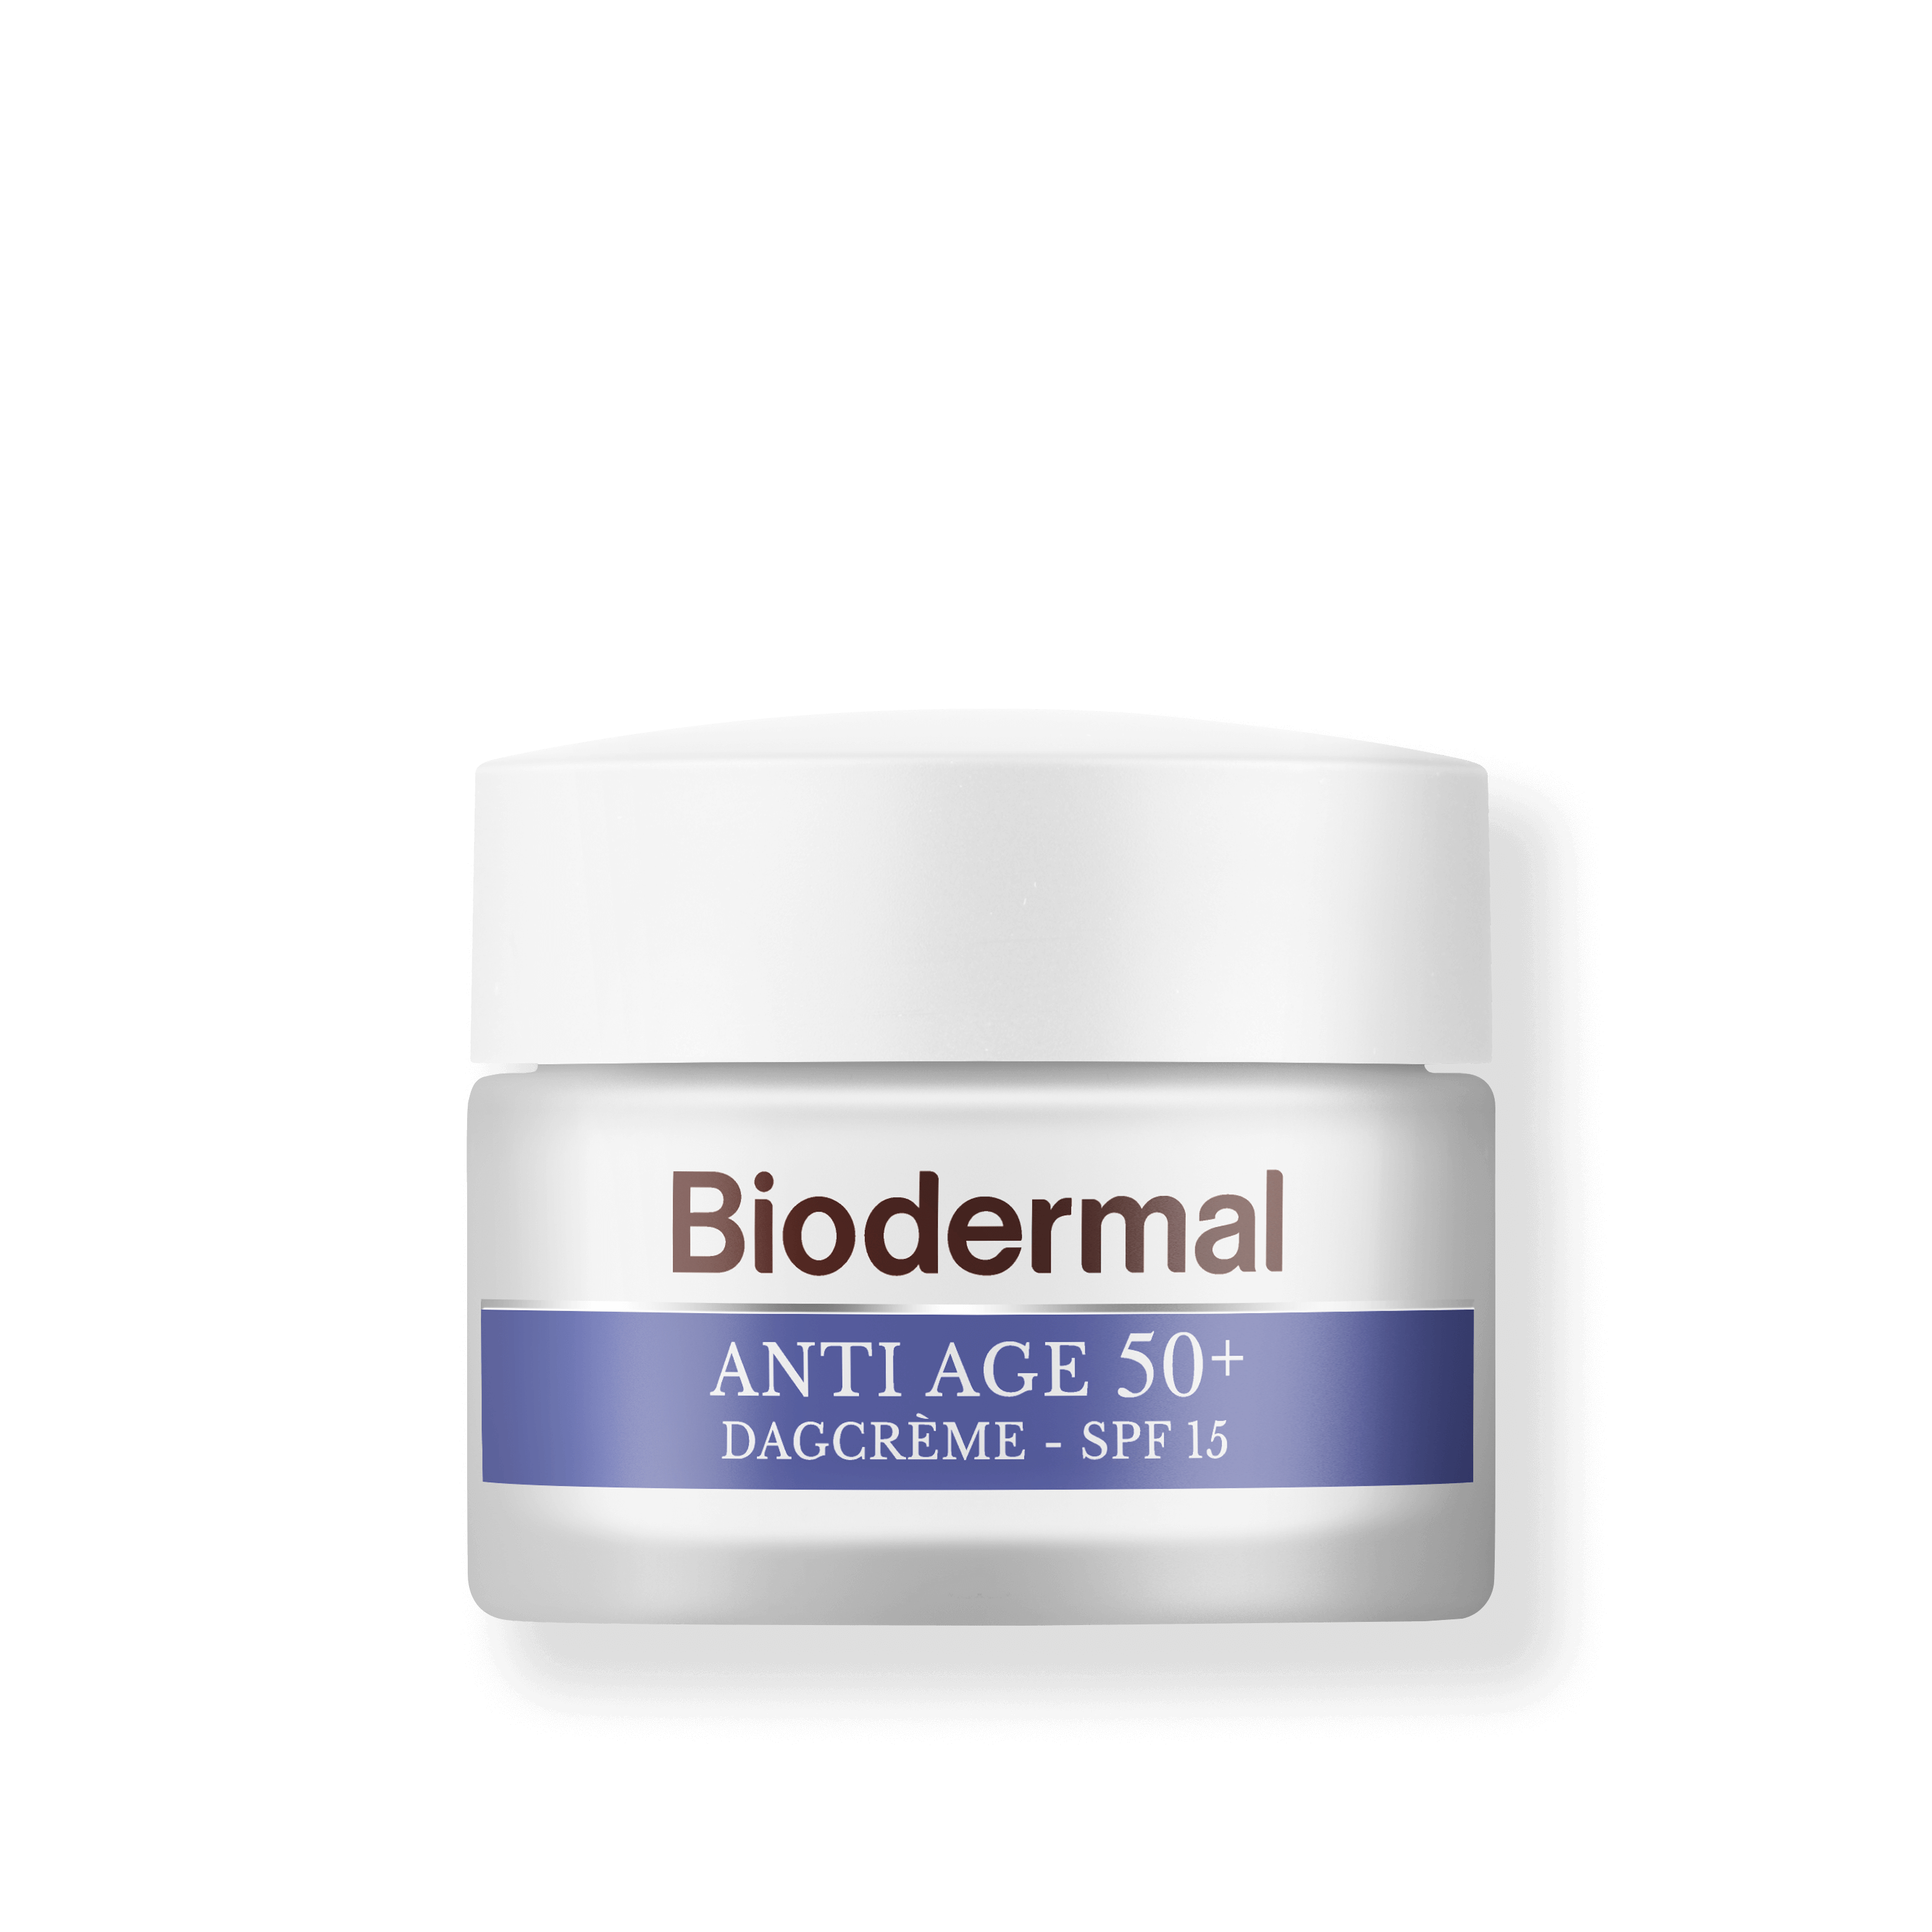 Onmiddellijk Minimaal Obsessie Biodermal Anti Age 50+ dagcrème | Biodermal